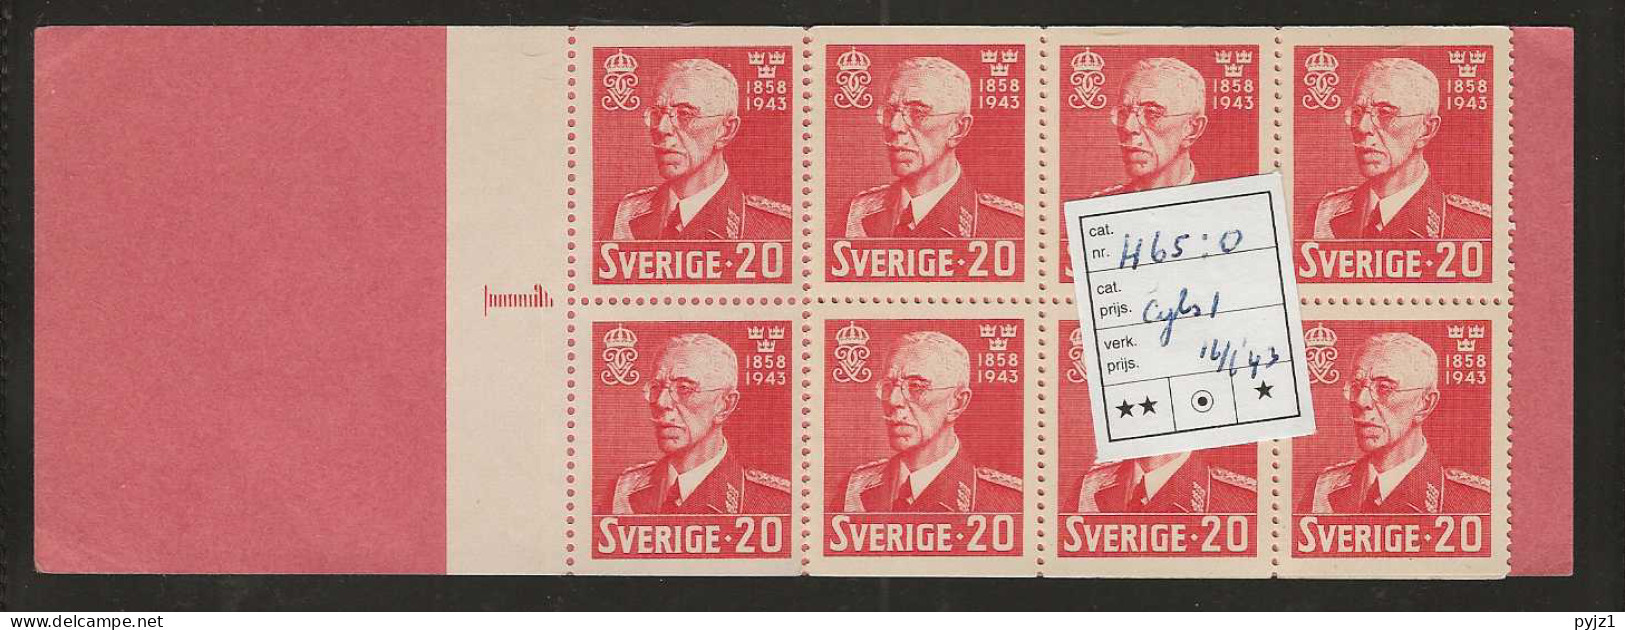 1942 MNH Sweden Booklet Facit H65 Postfris** - 1904-50